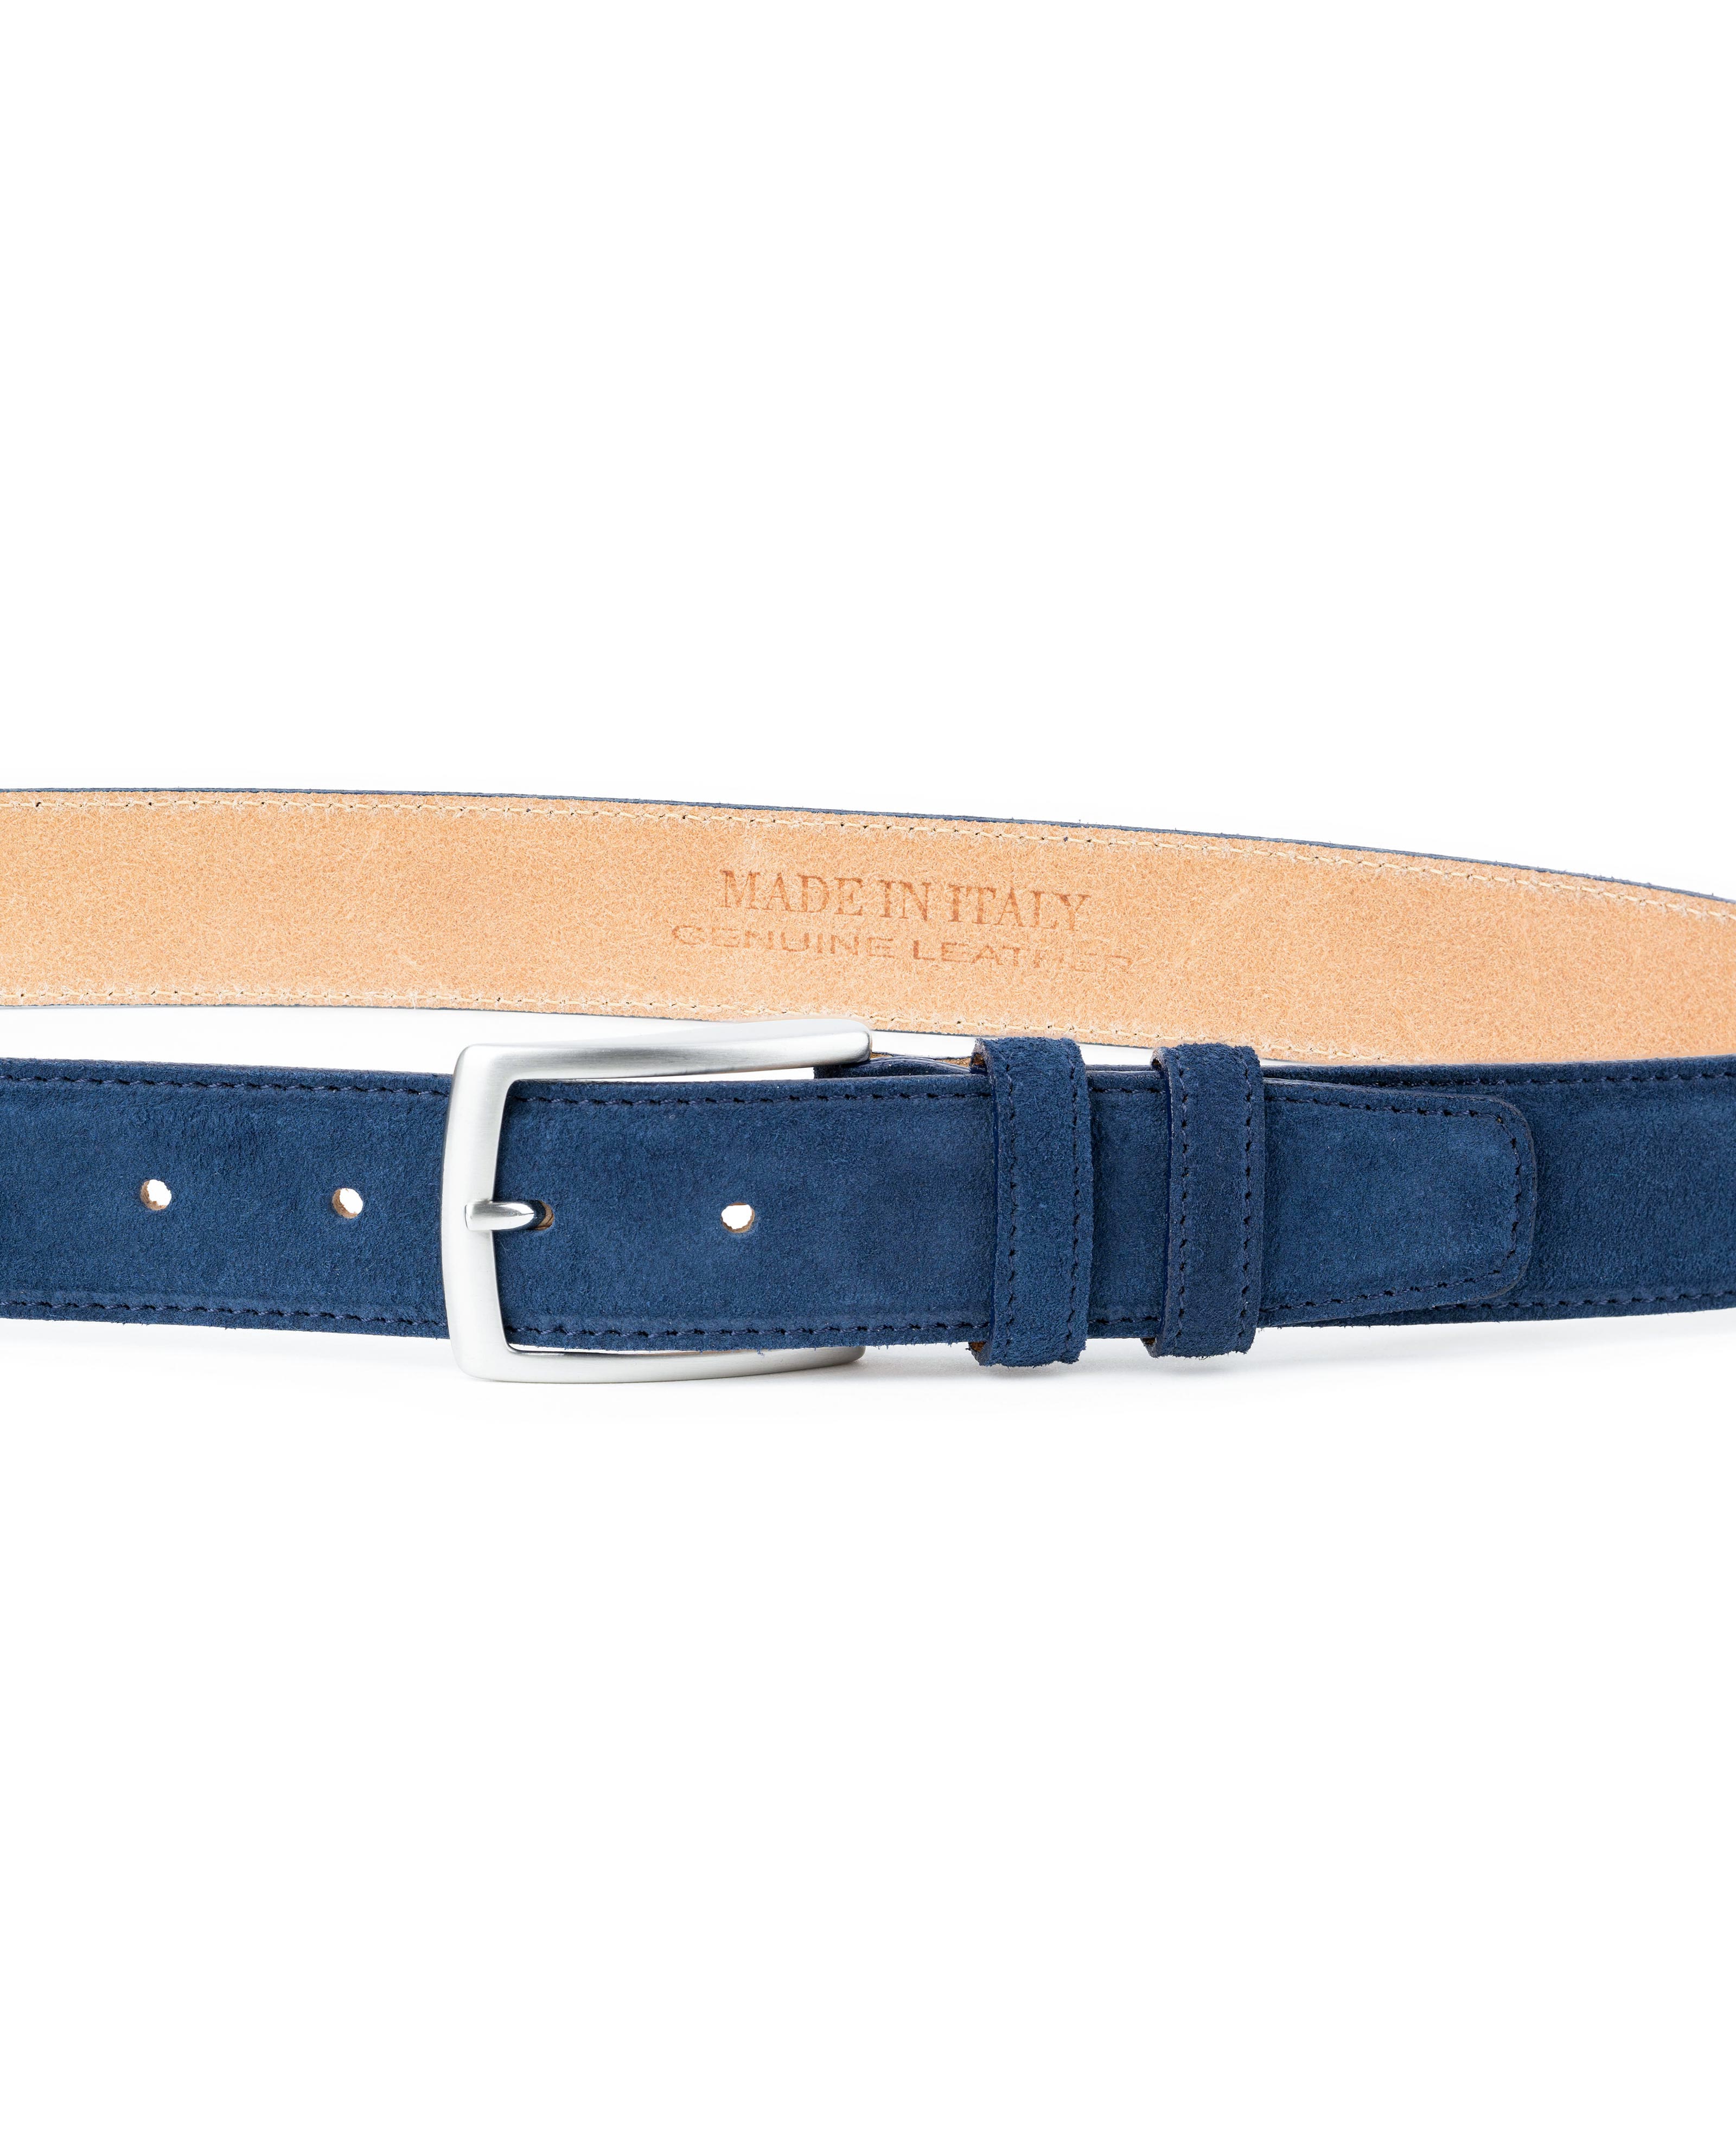 Dark Blue Suede Belt Men's belts Genuine Italian Leather Navy casual Capo Pelle